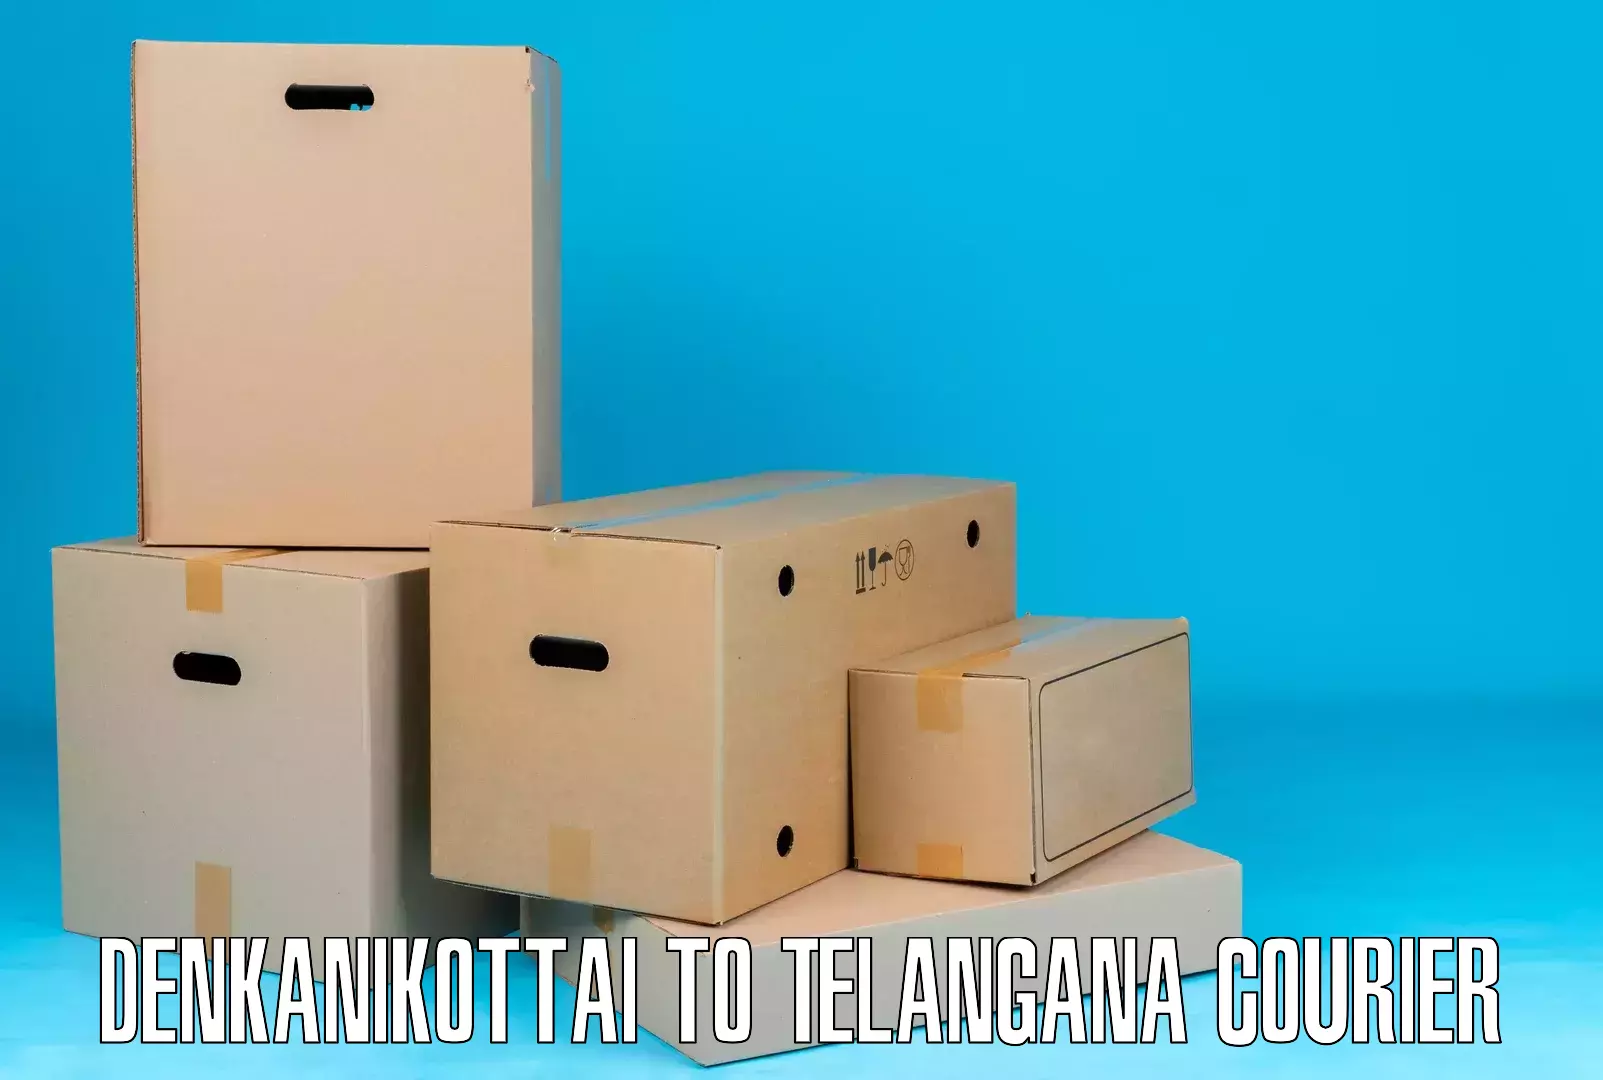 Nationwide shipping coverage in Denkanikottai to Telangana